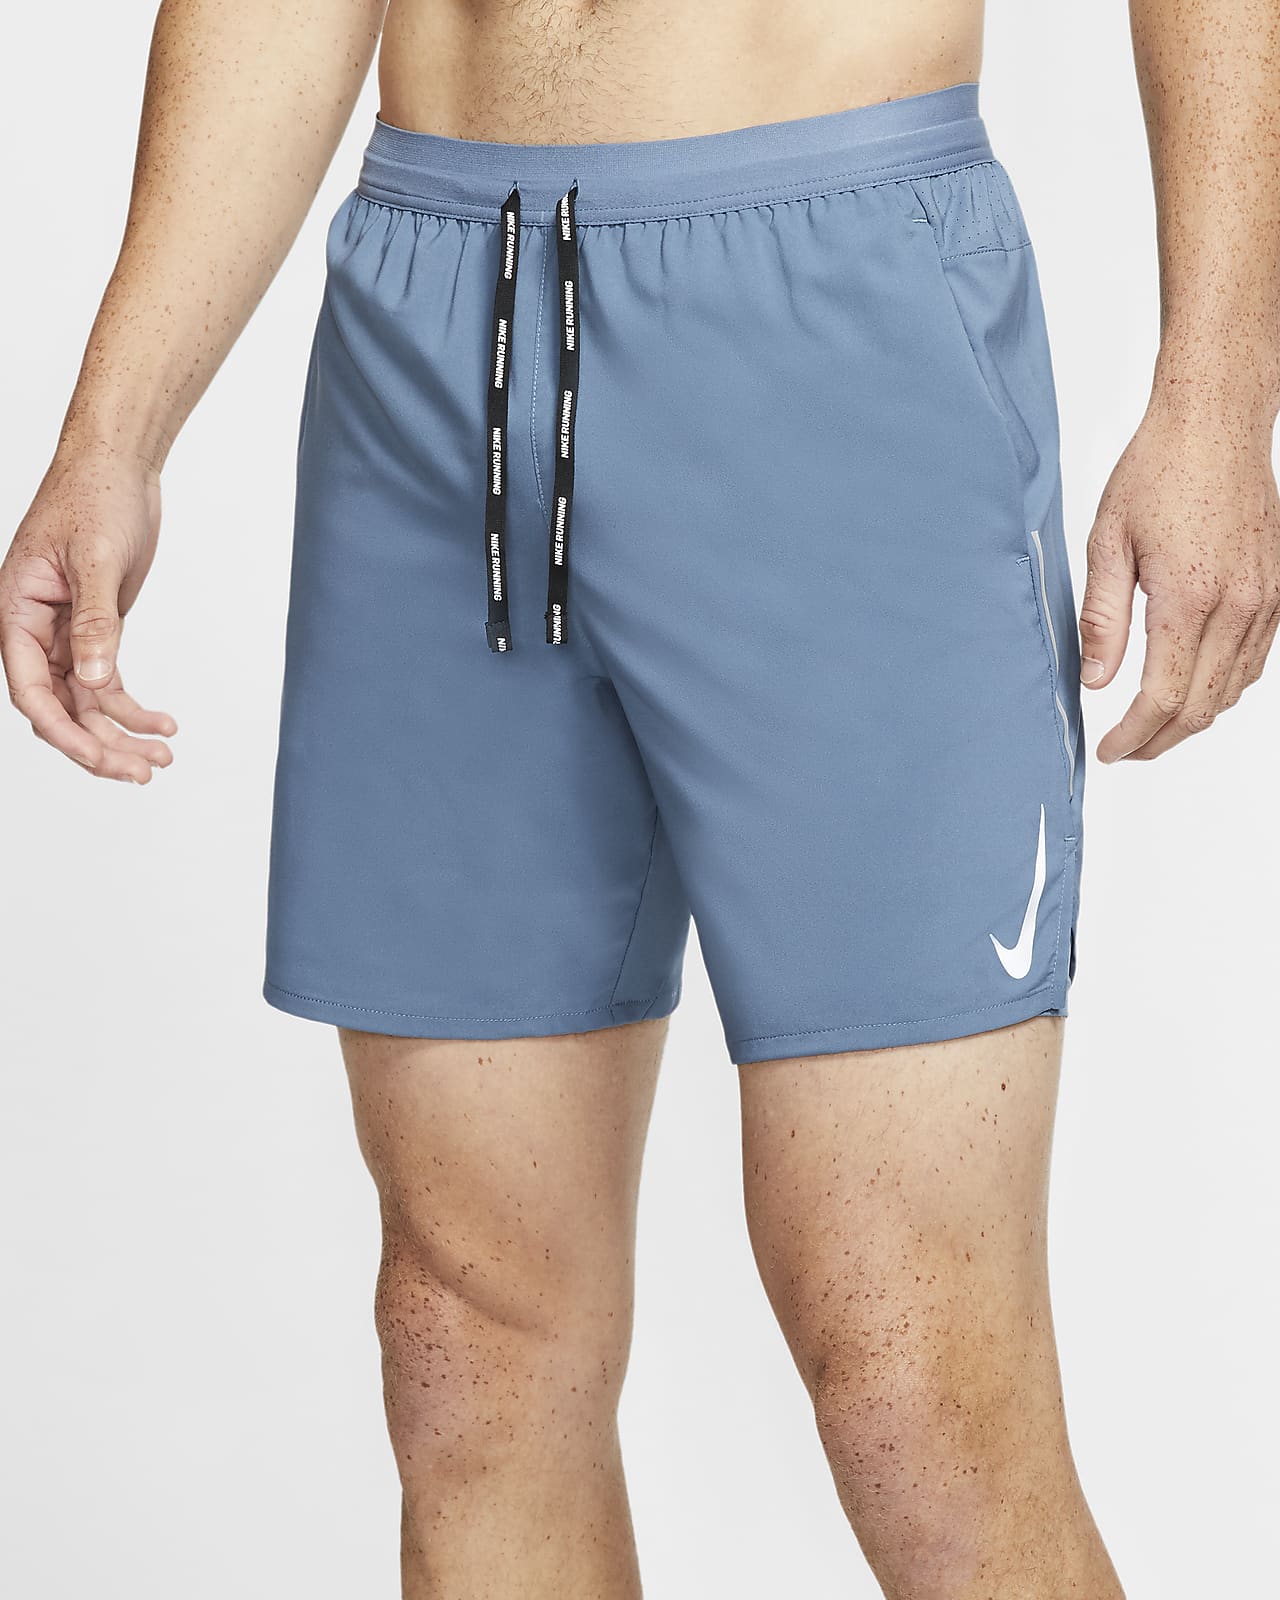 nike flex shorts sale